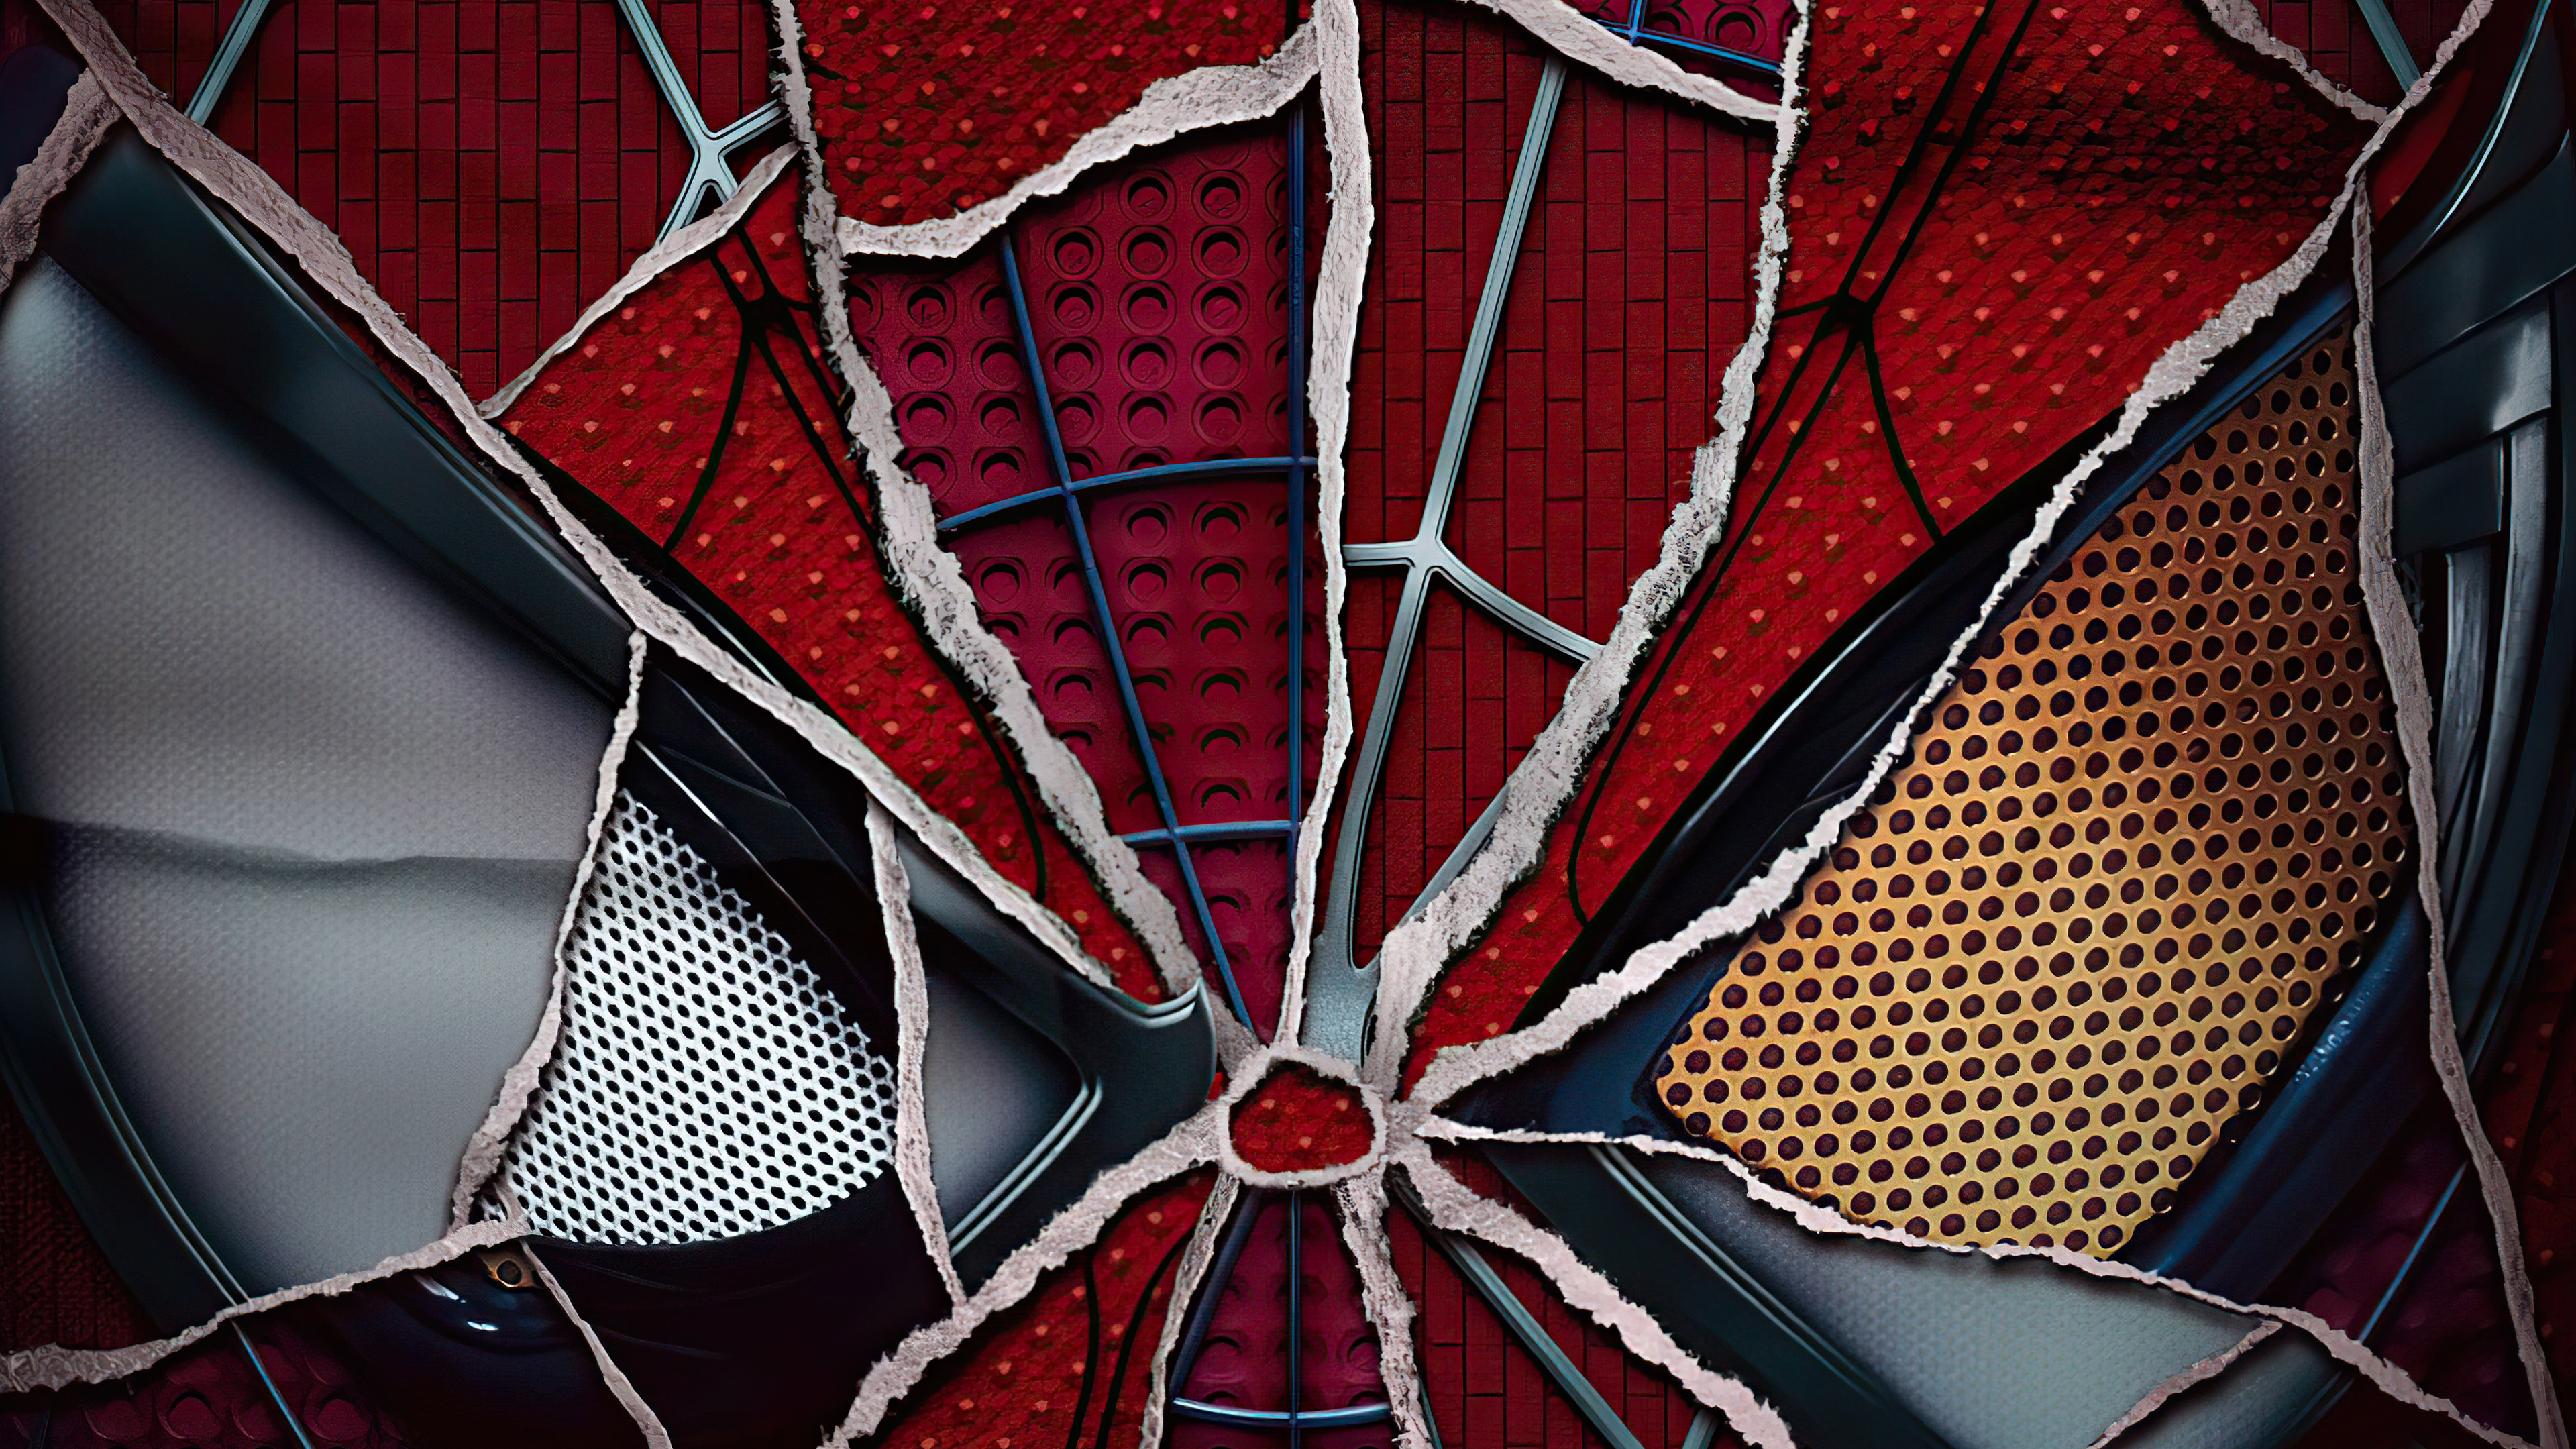 Spider-Man: No Way Home 4k Ultra HD Wallpaper